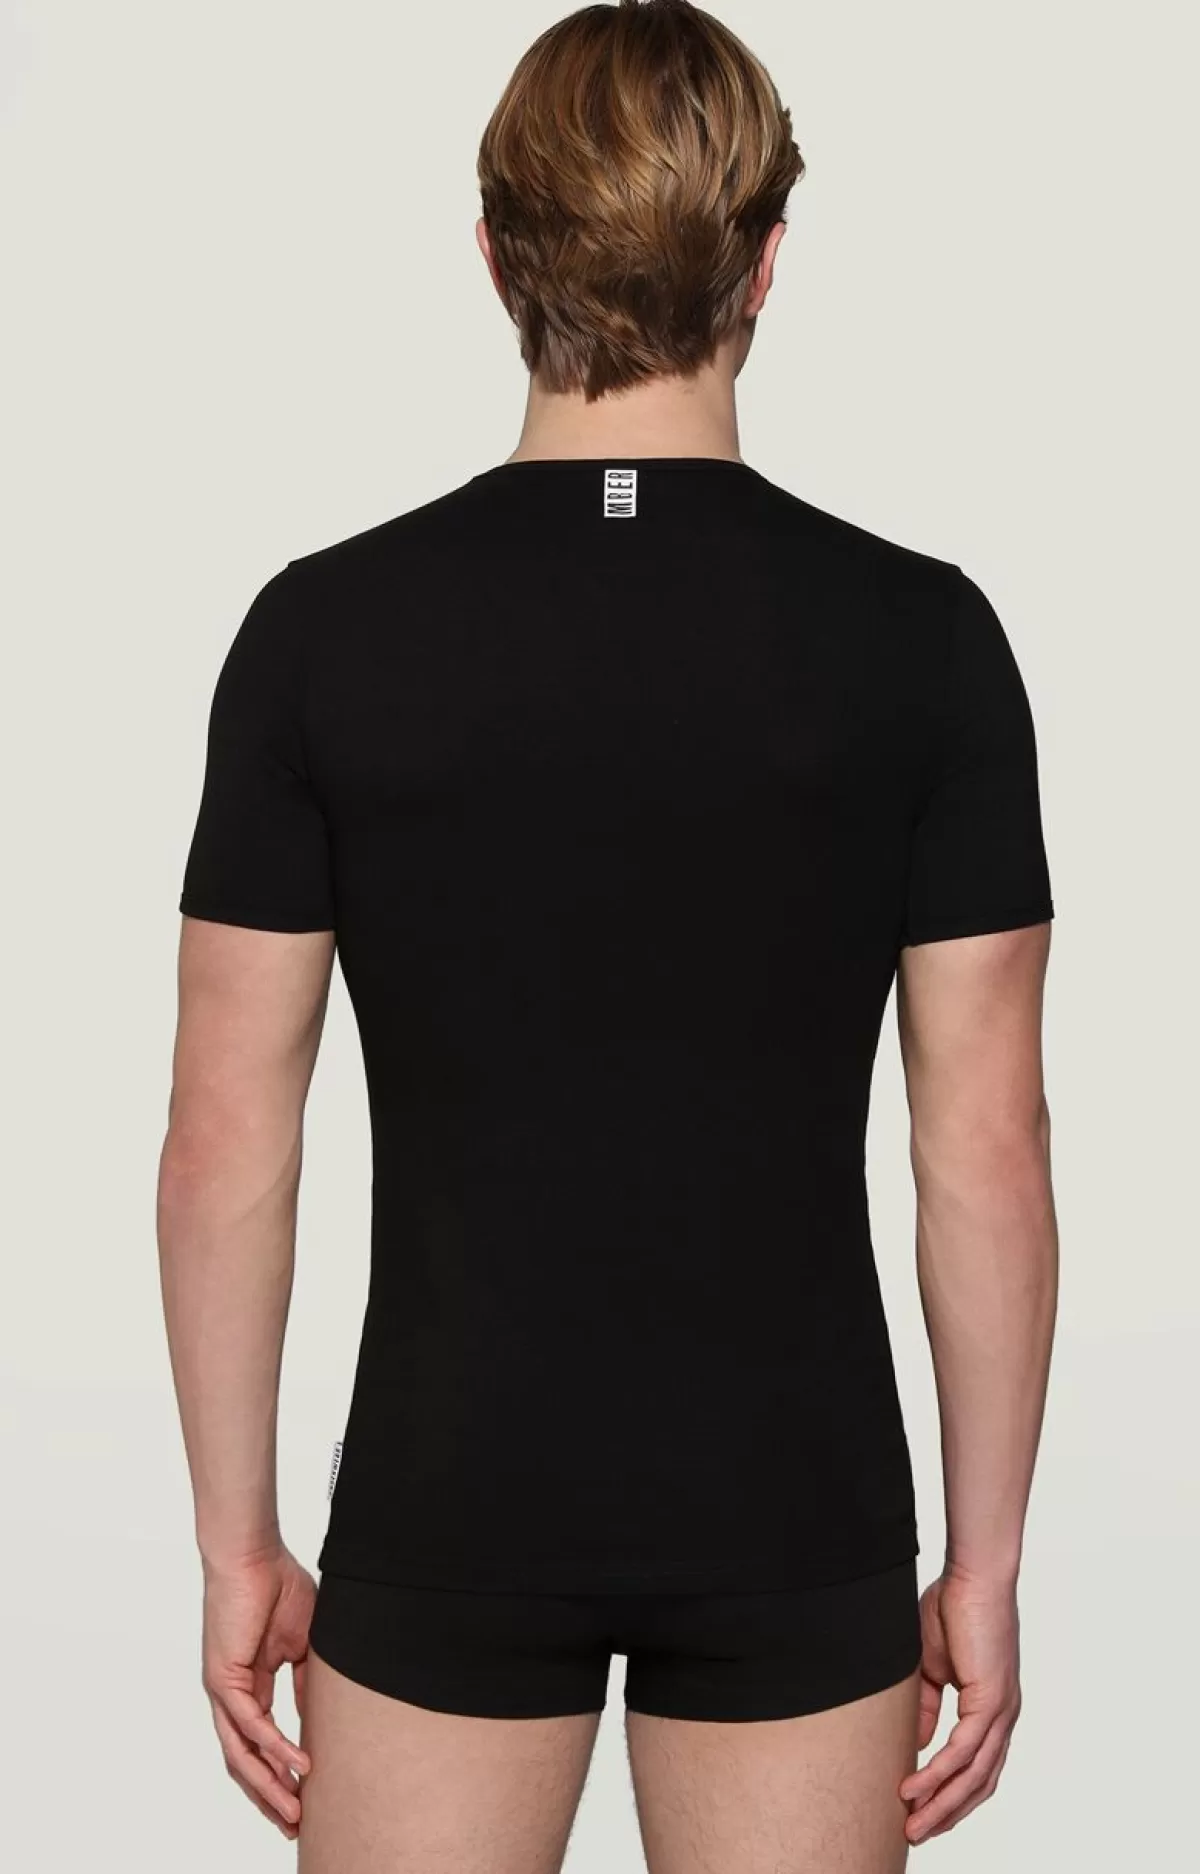 Bikkembergs 2-Pack Men'S Undershirt Black Flash Sale